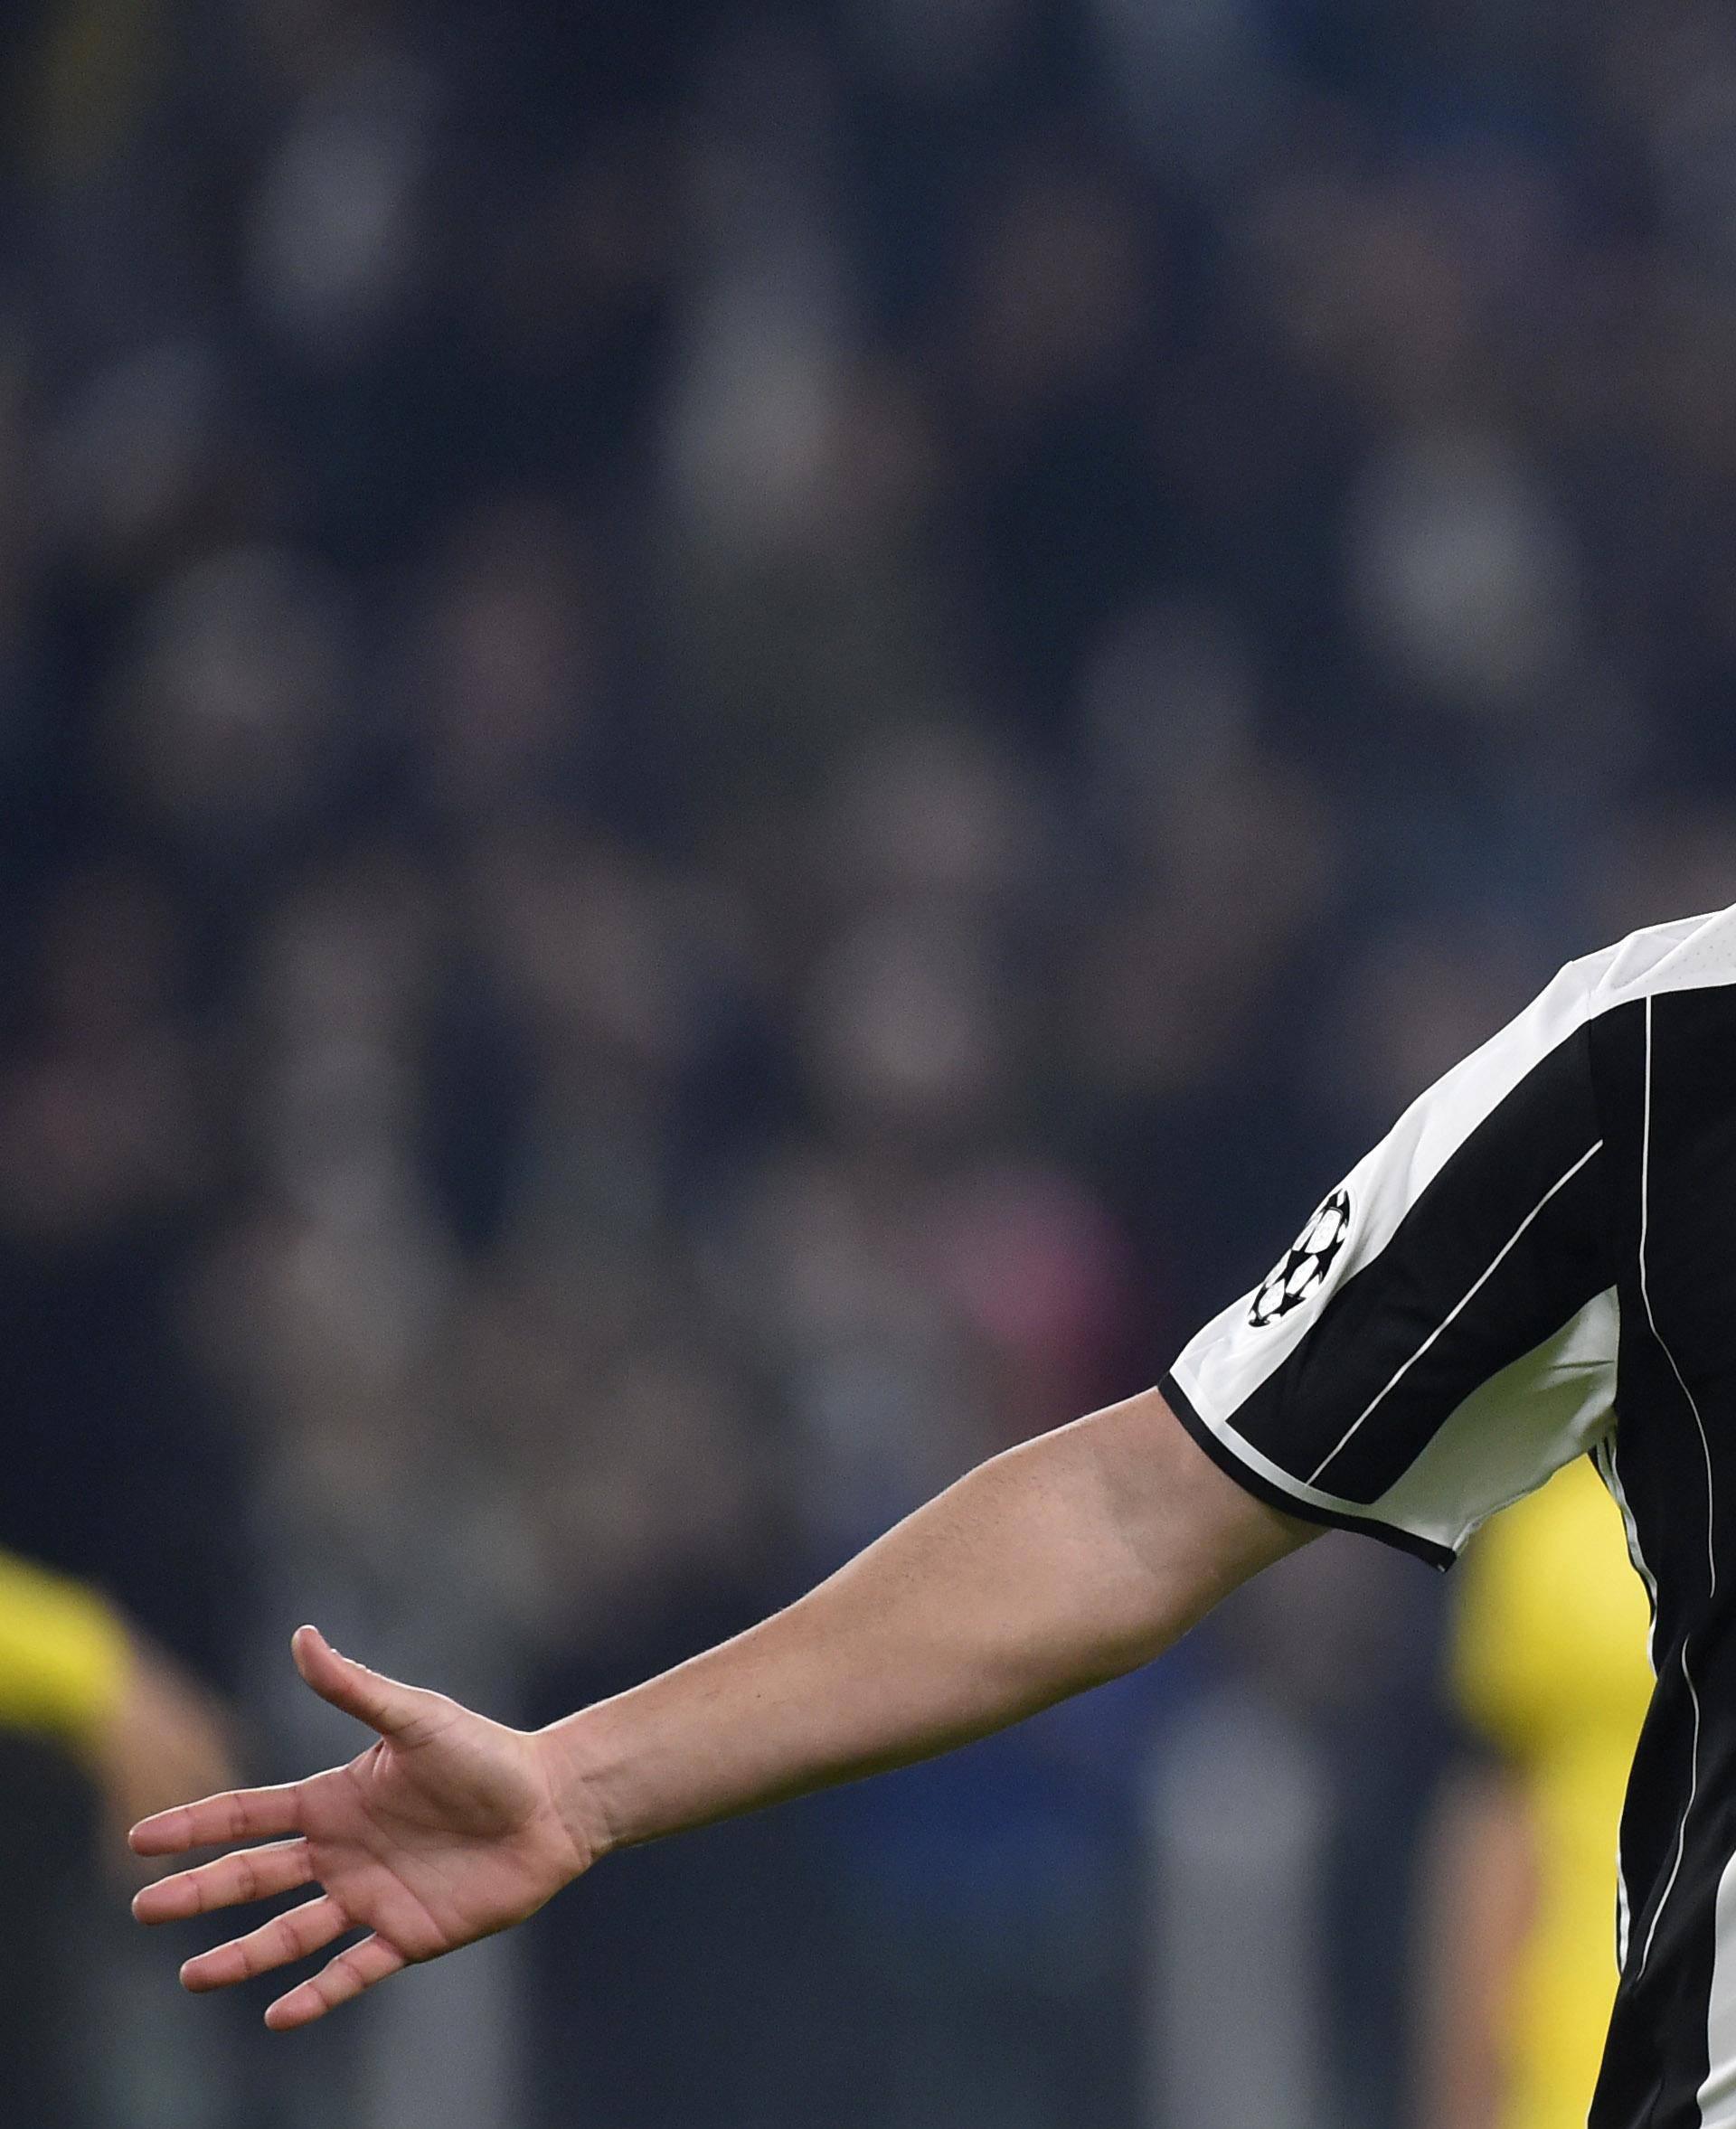 Juventus' Gonzalo Higuain celebrates scoring their first goal